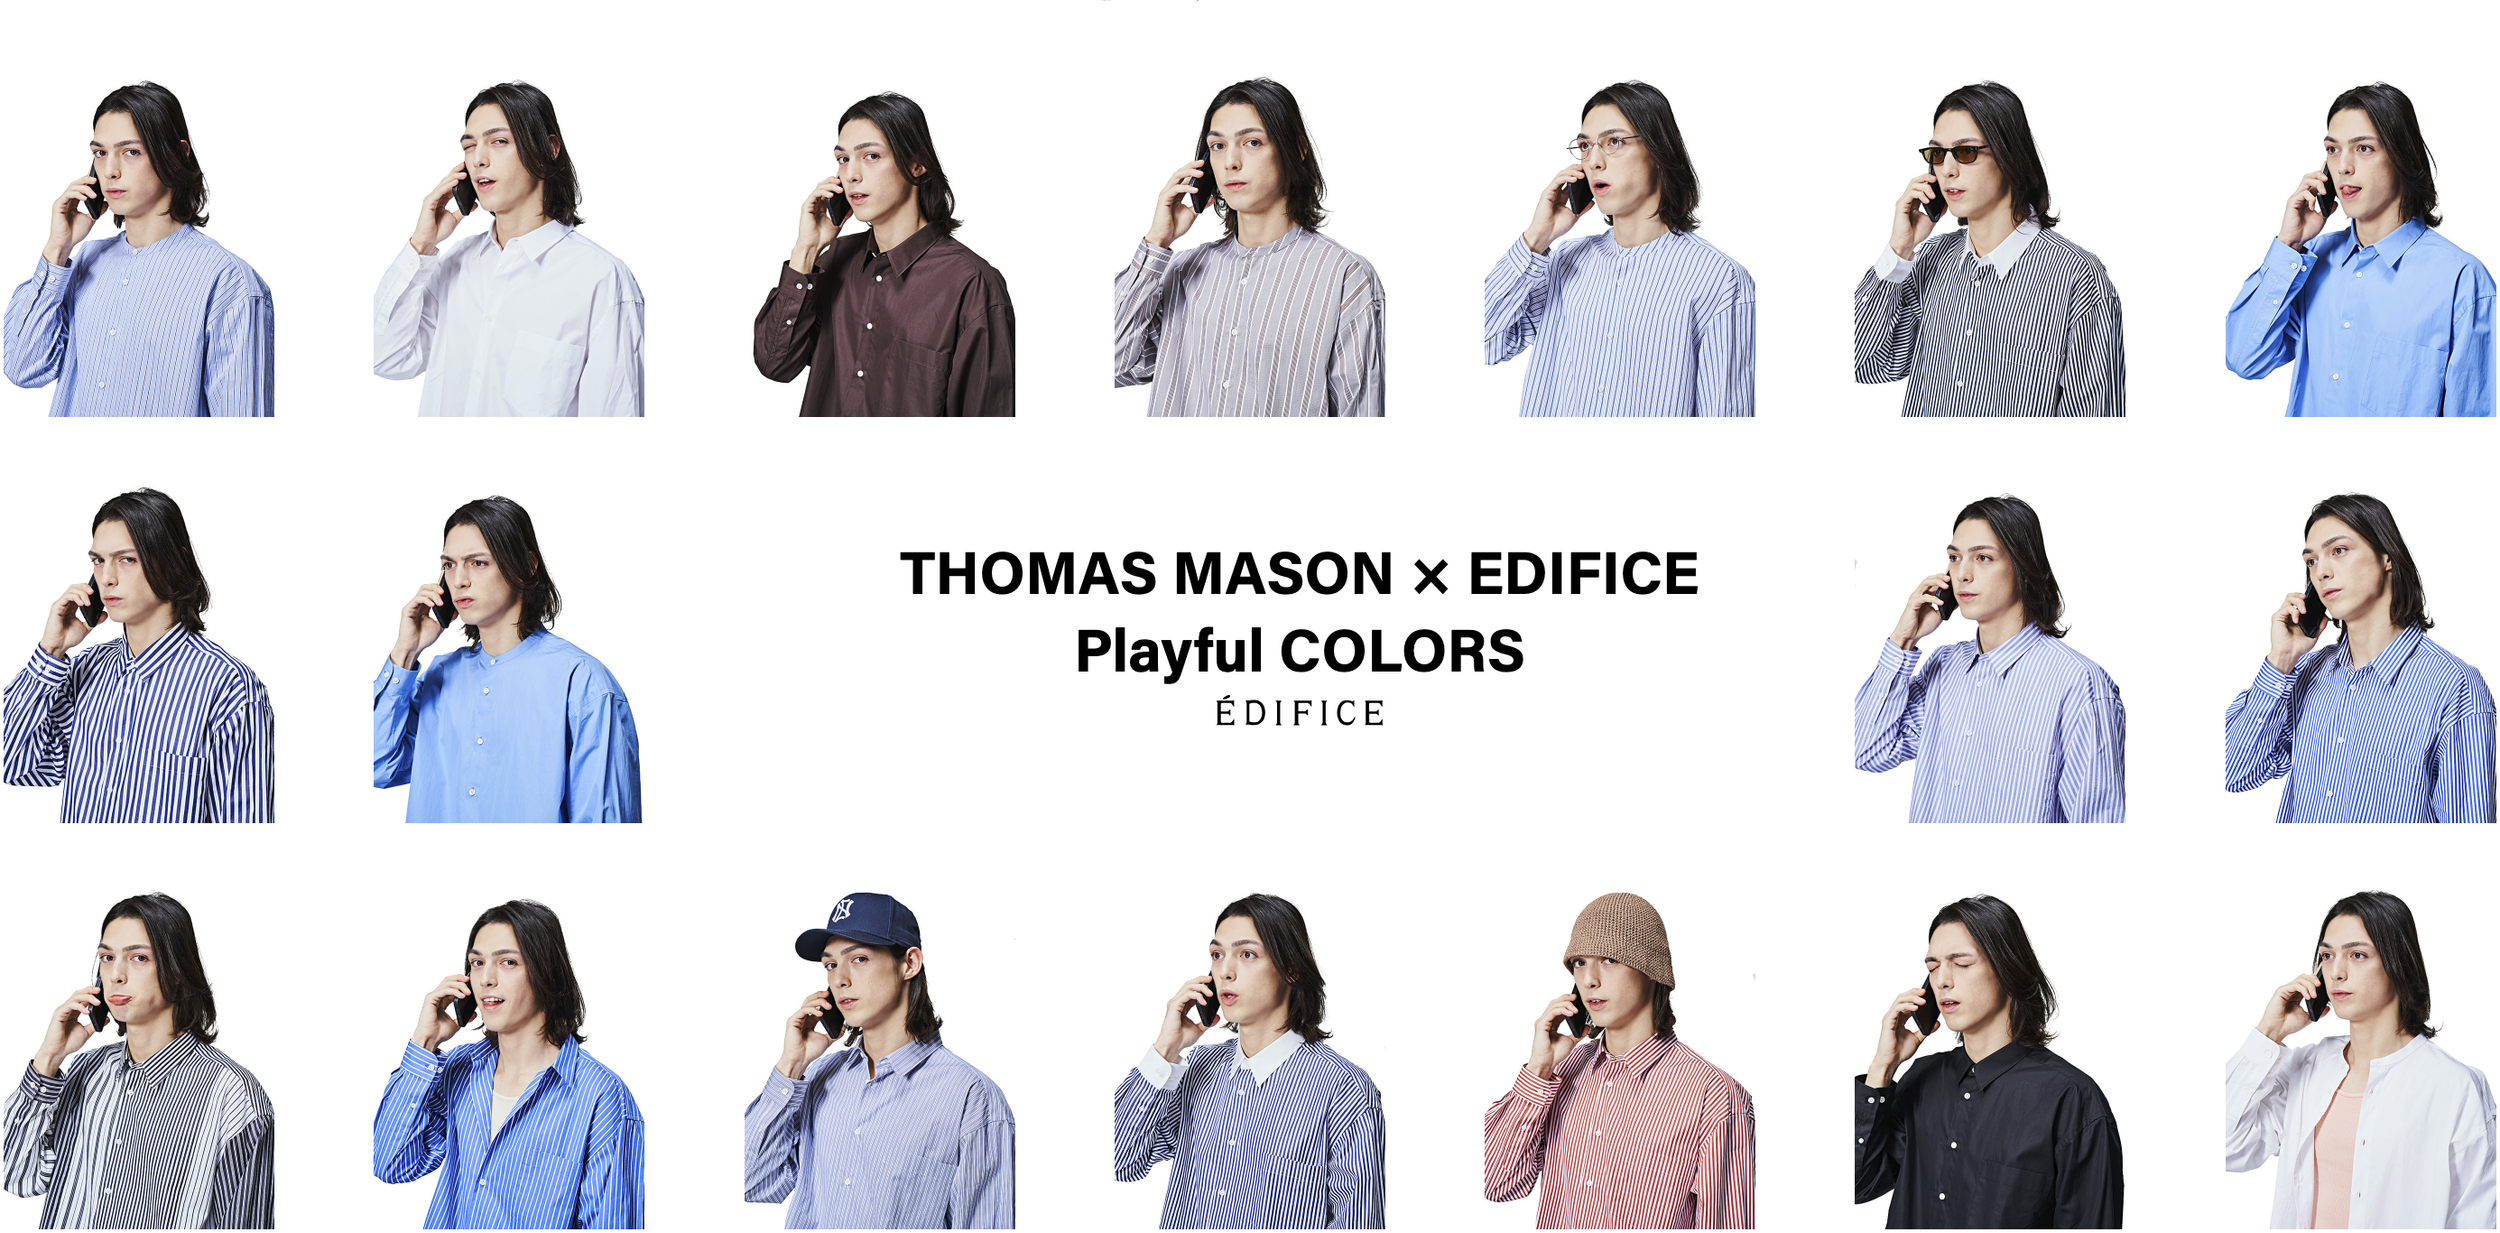 THOMAS MASON x EDIFICE